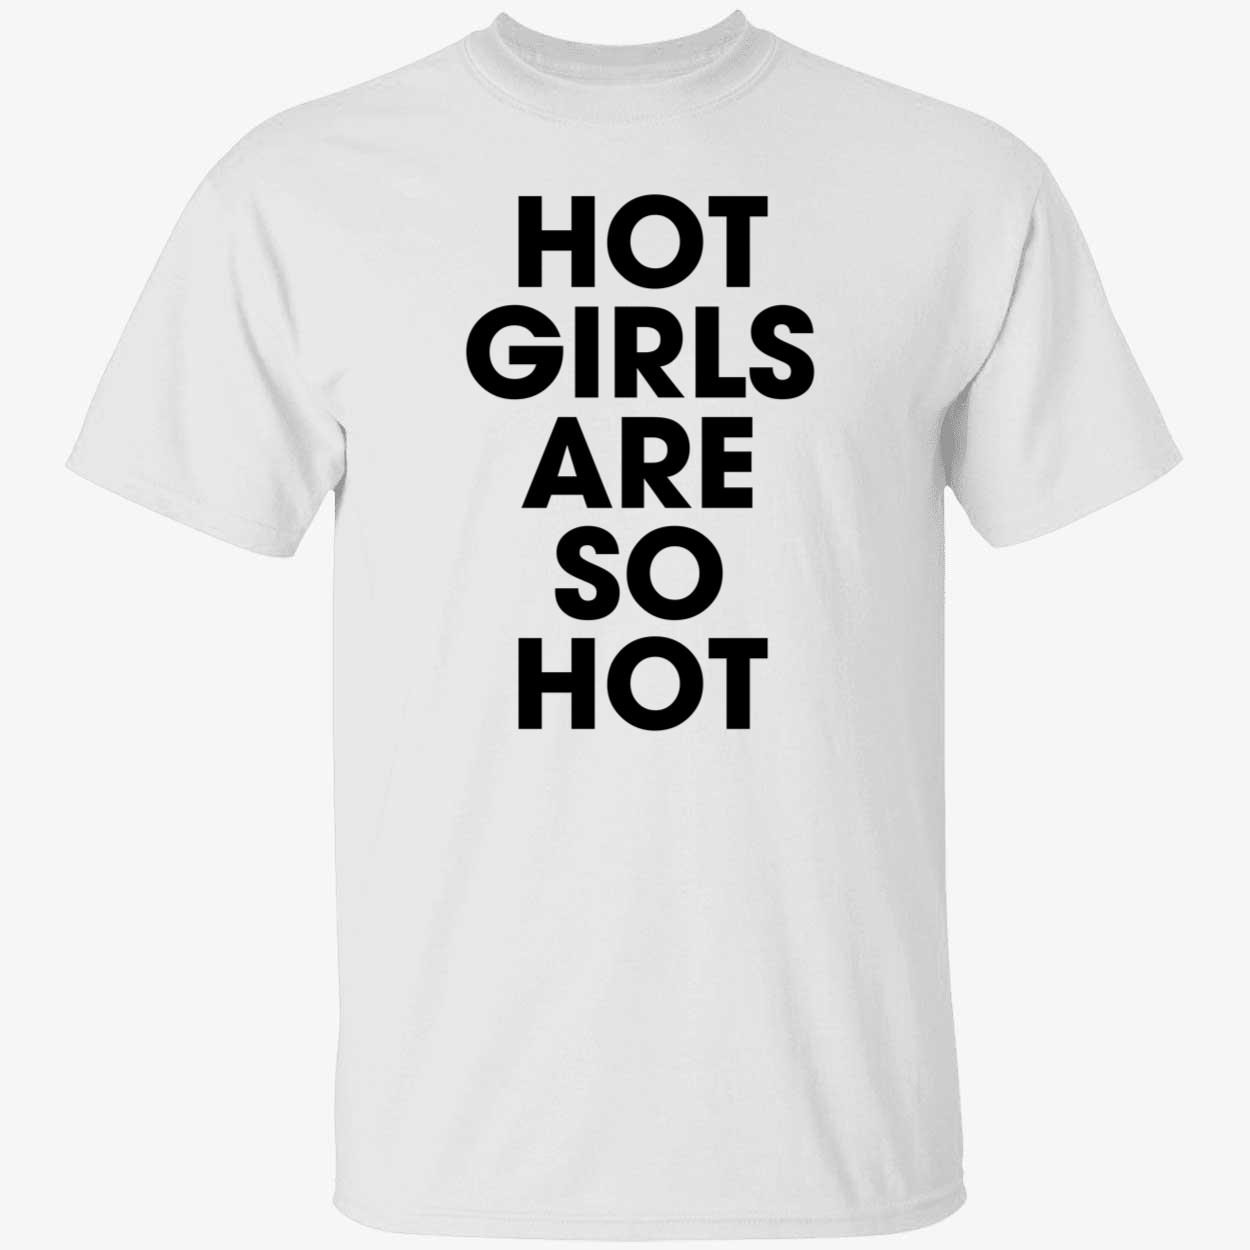 Hot girls are so hot gift shirts - ReviewsTees